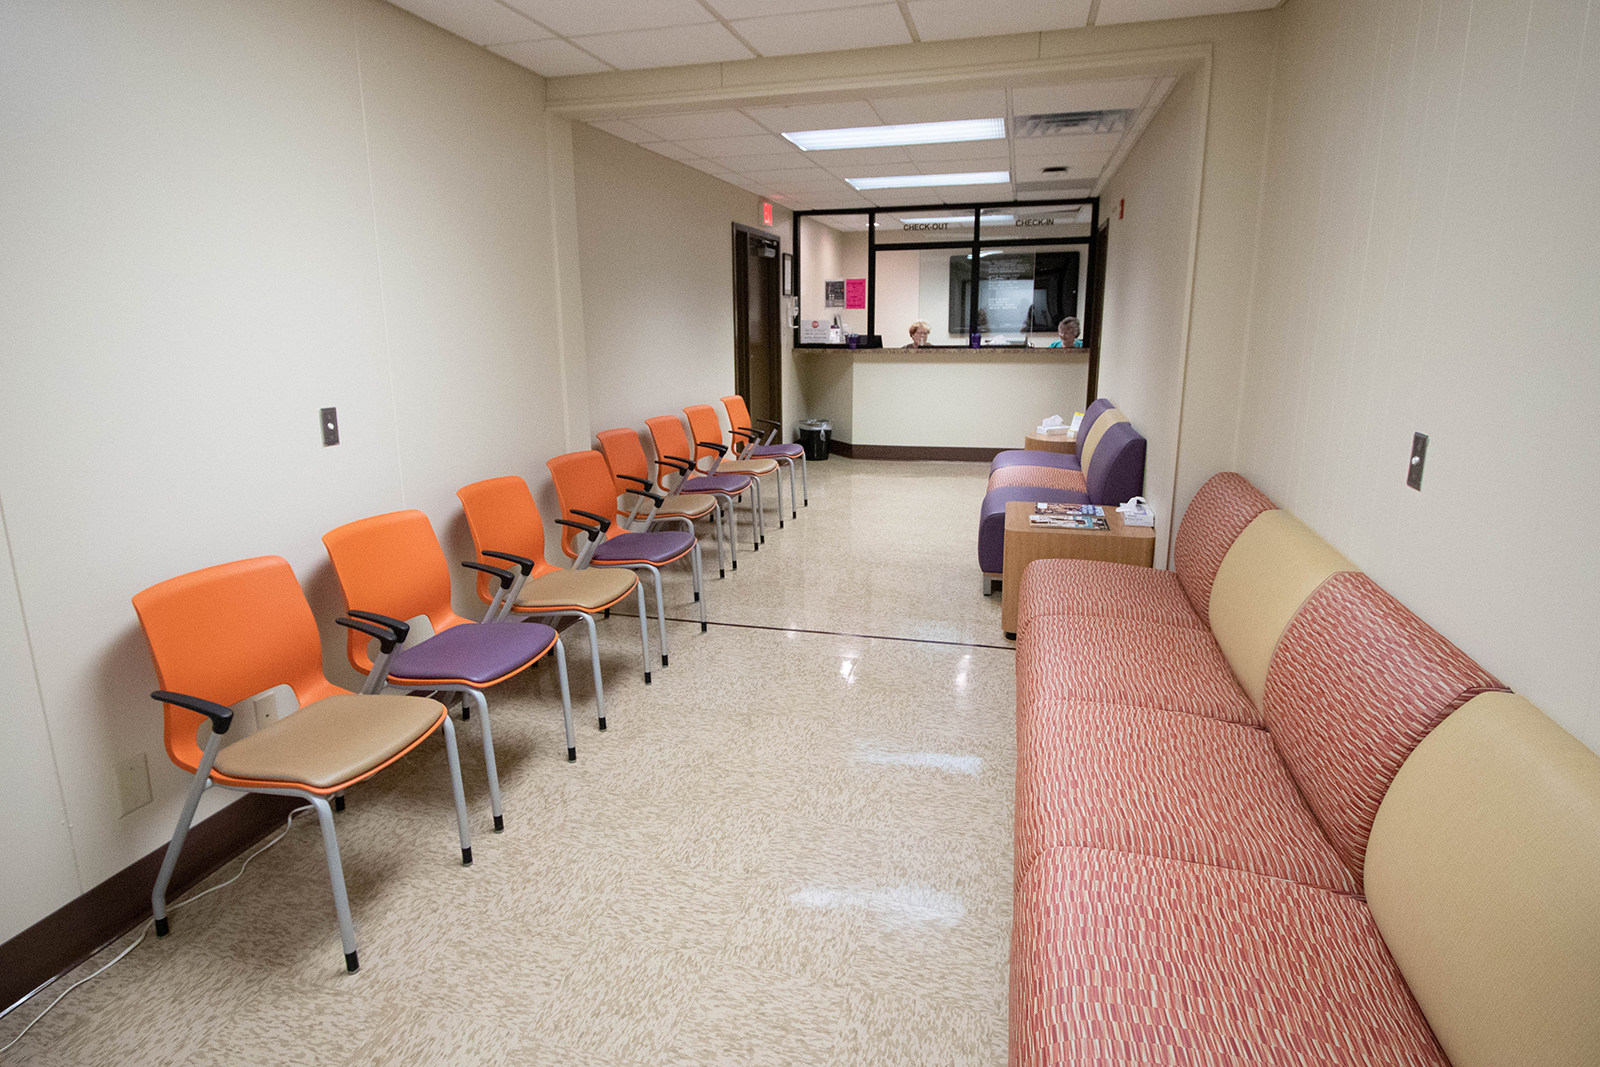 University Health Waiting Area